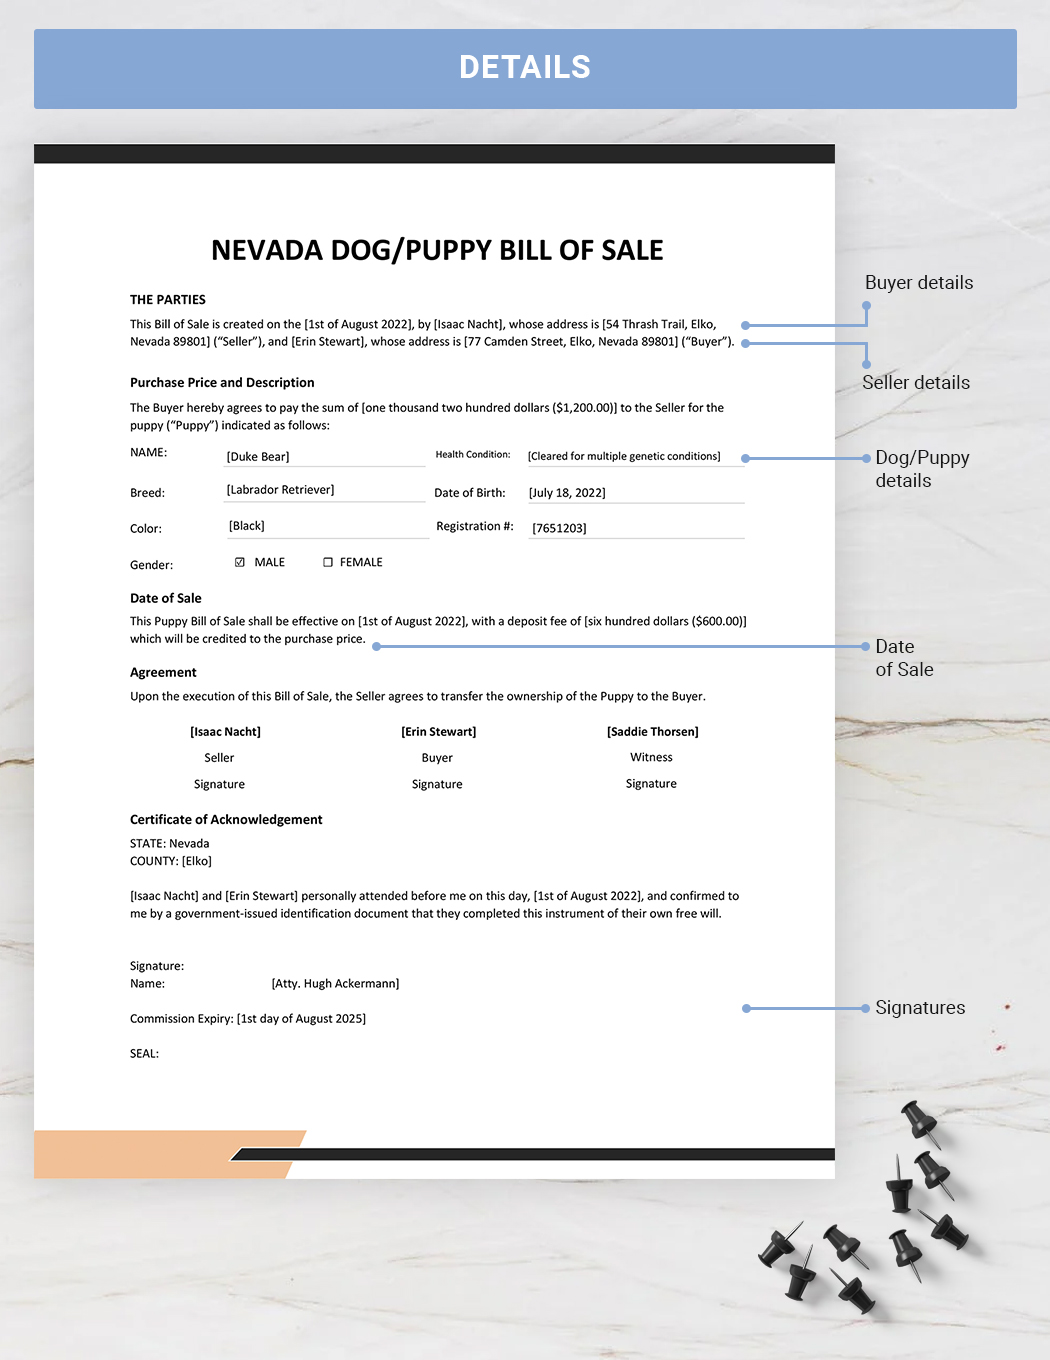 Nevada Dog/Puppy Bill of Sale Template